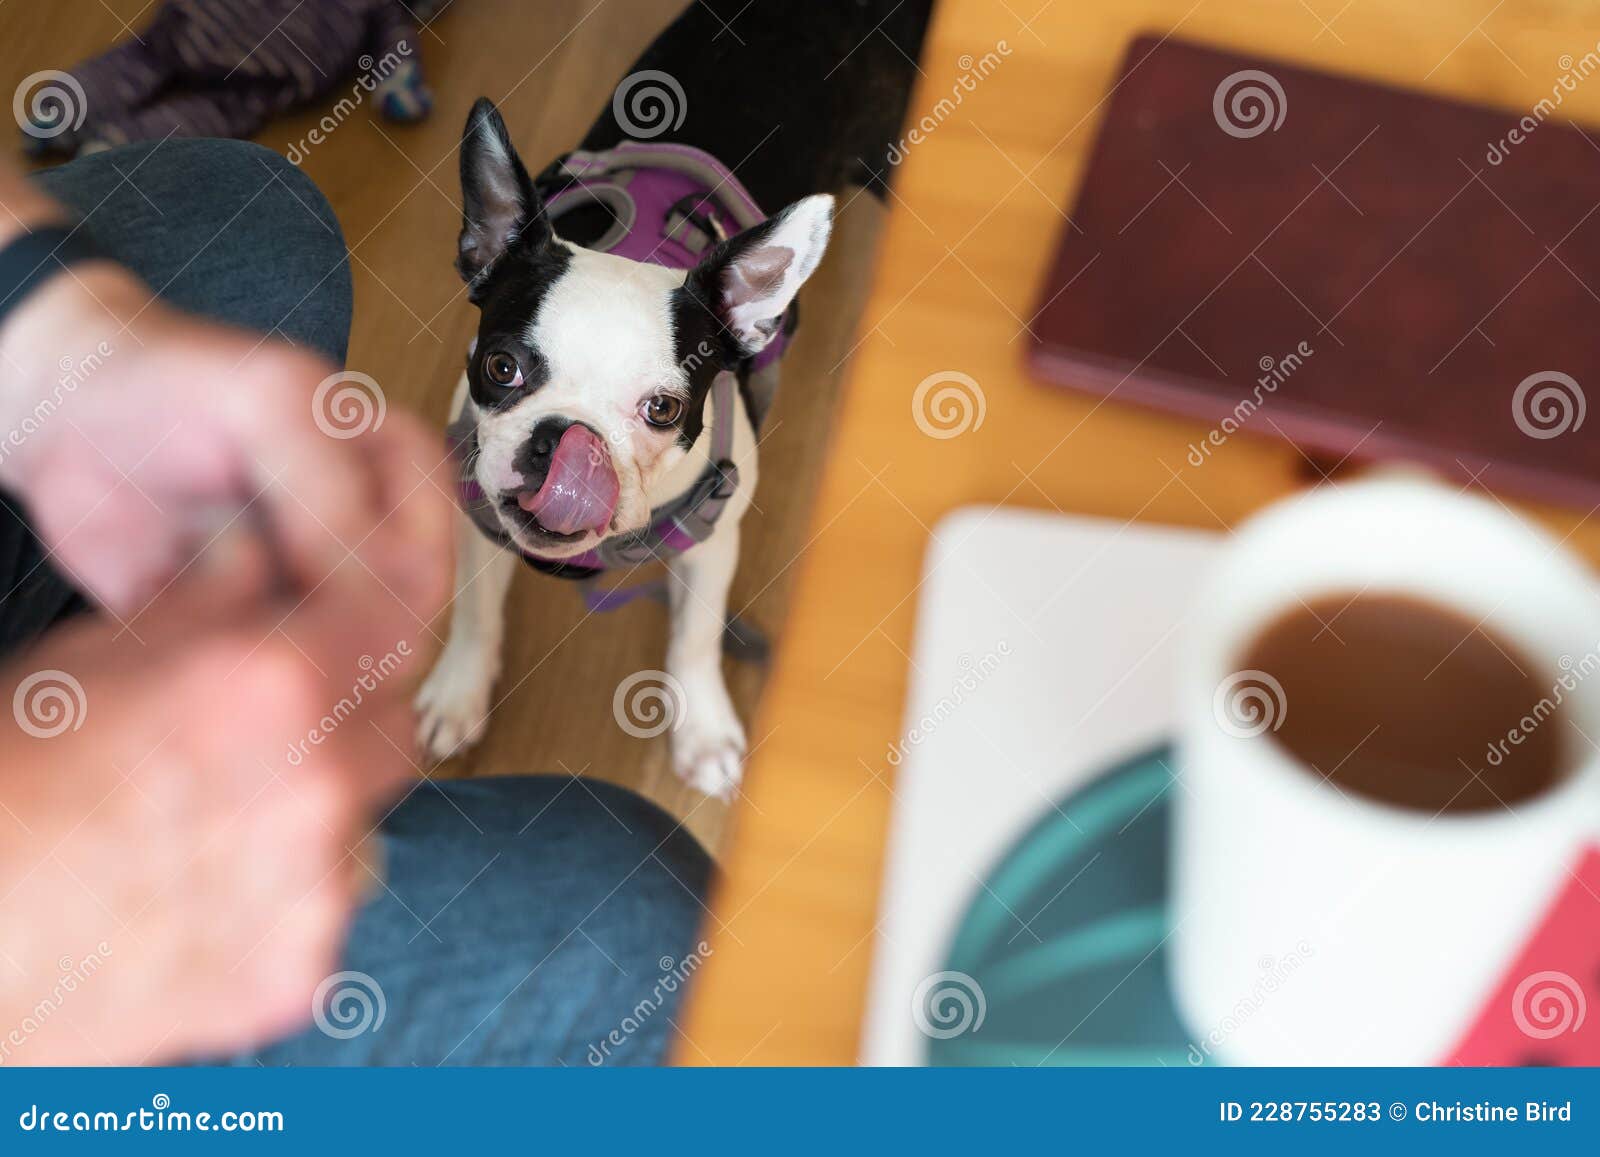 Boston Terrier Face cookie cuttercute dog portrait treats American Gentleman